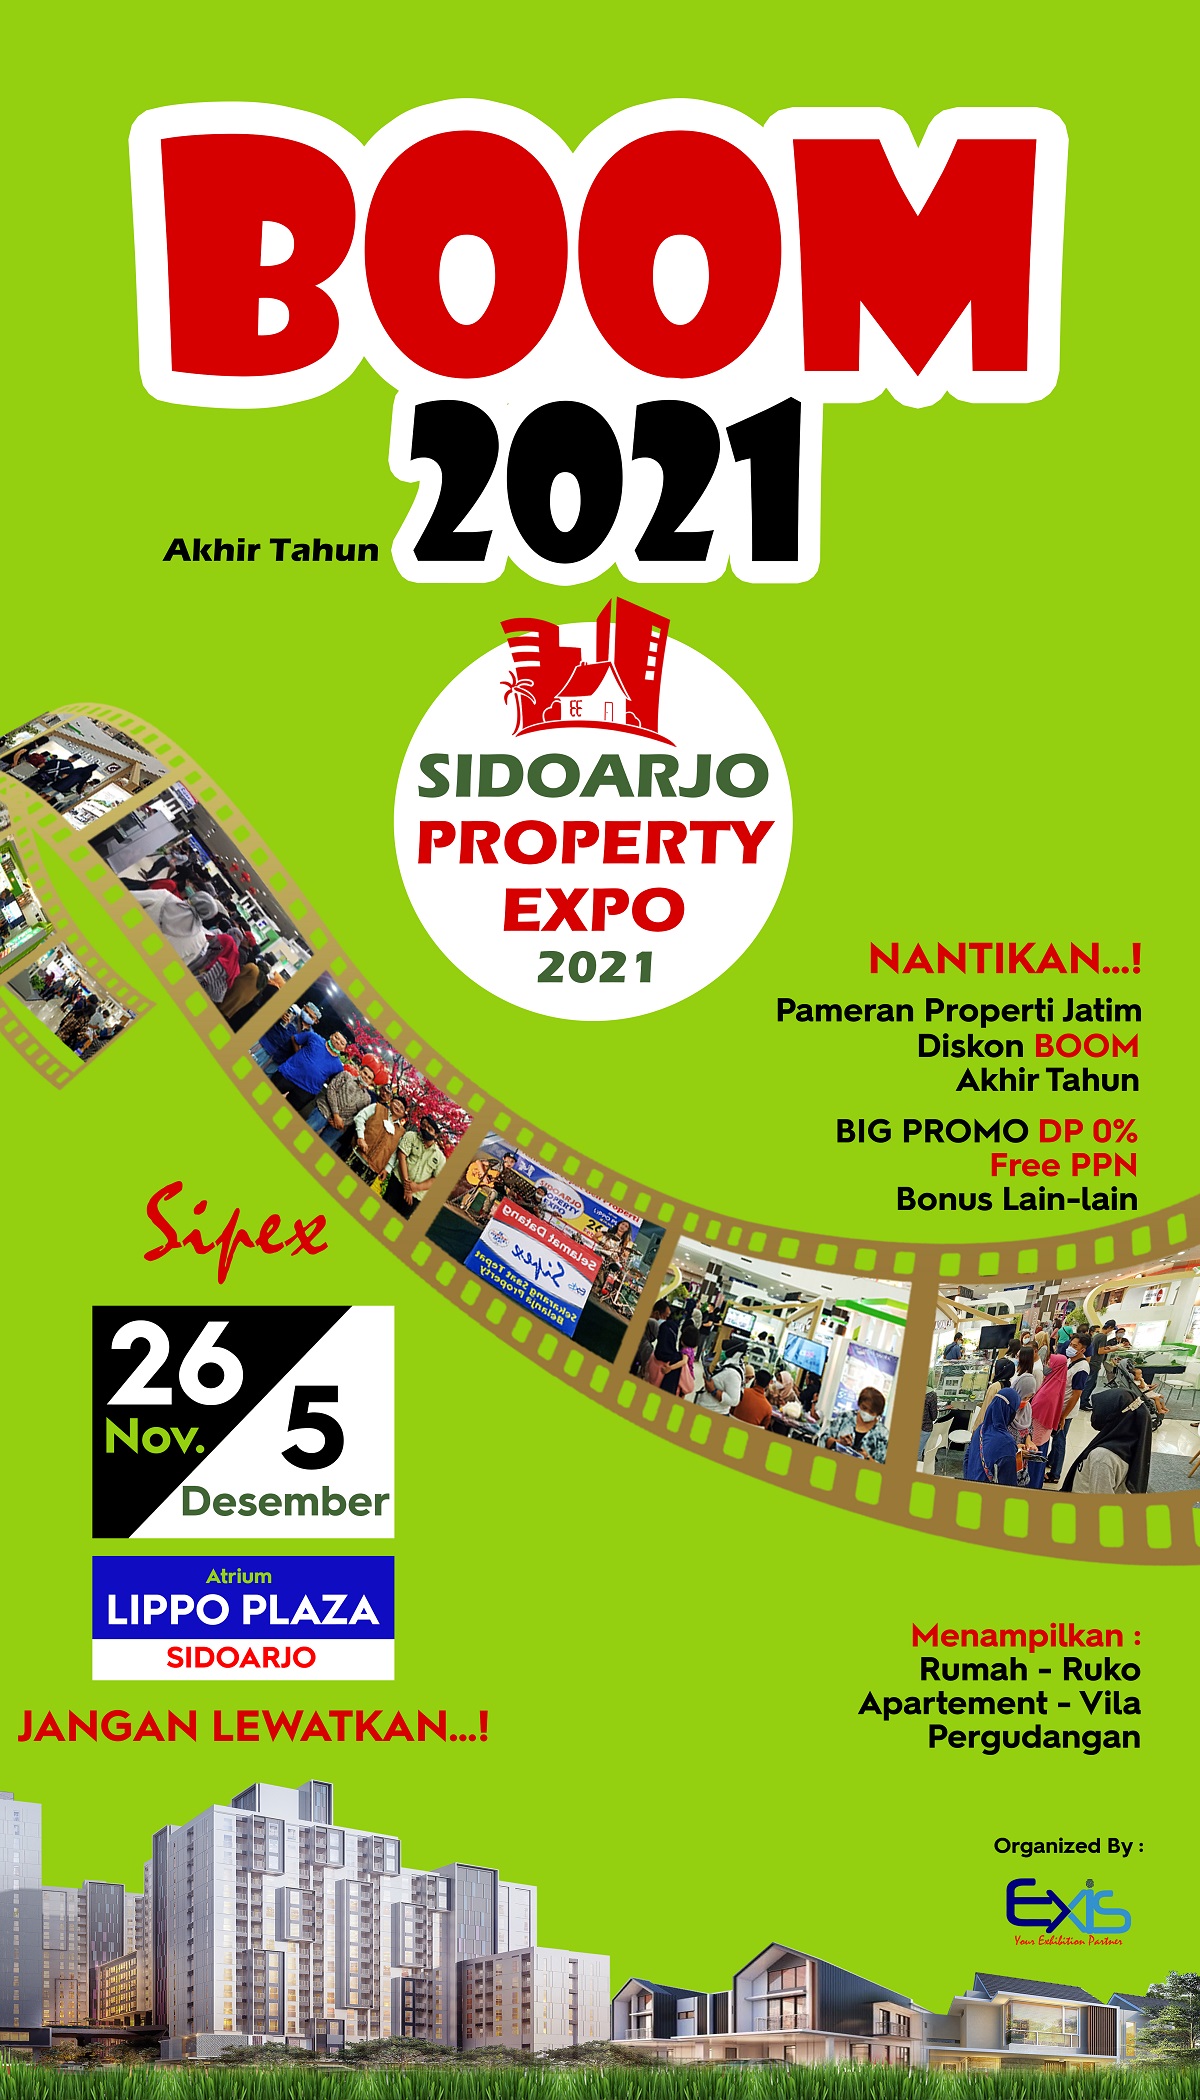 SIDOARJO PROPERTY EXPO (SIPEX 2021) - Pameran Properti Sidoarjo, Pameran Properti Jatim